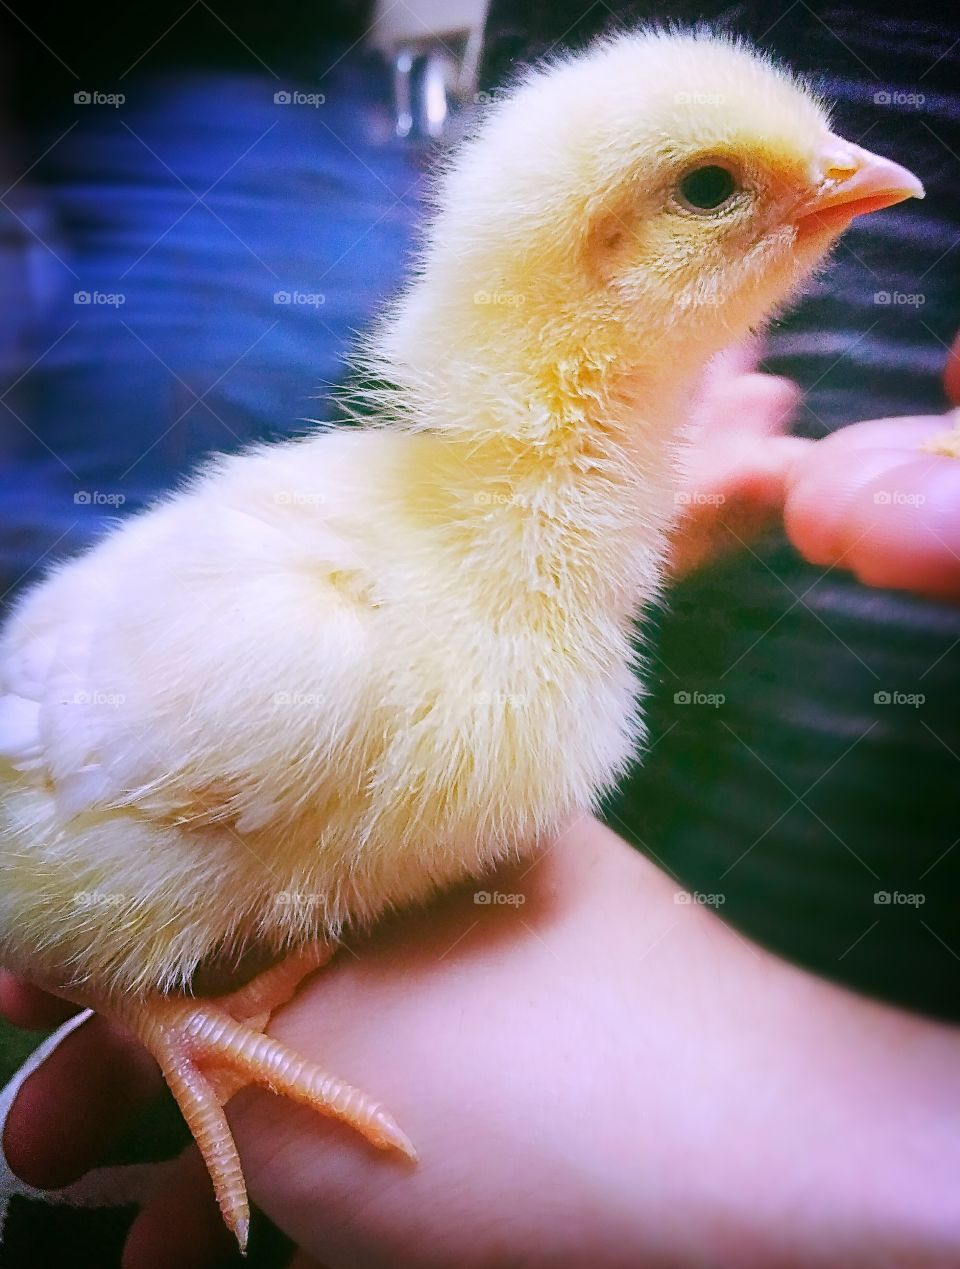 Cute chick